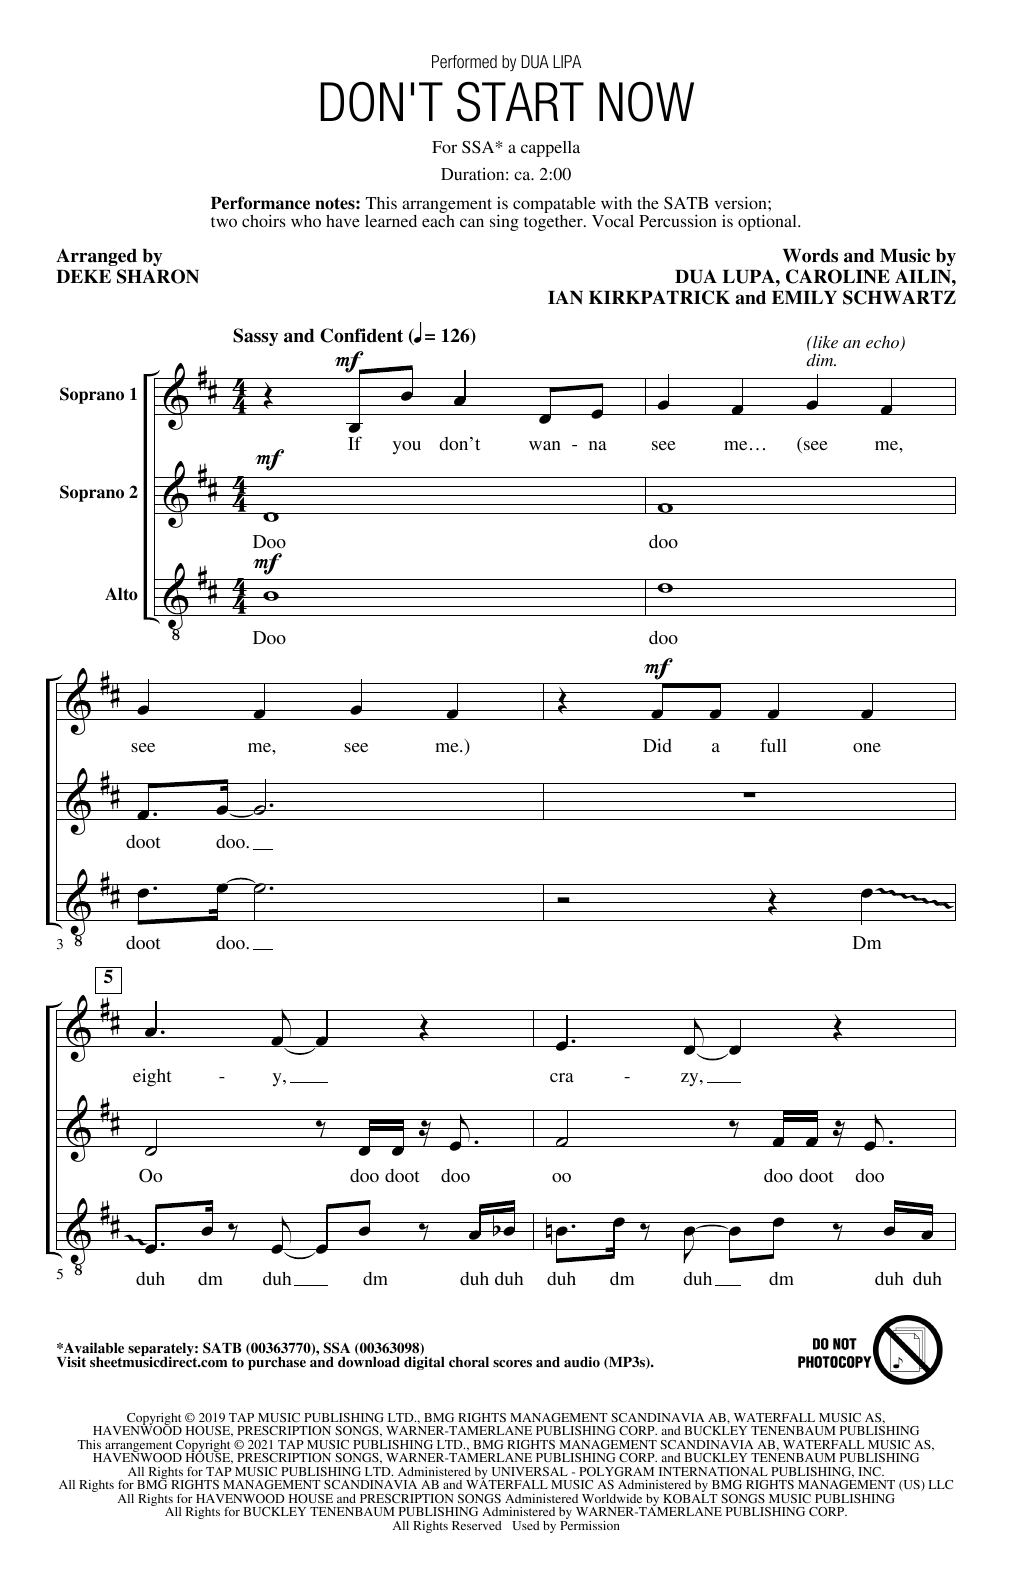 Dua Lipa Don't Start Now (arr. Deke Sharon) Sheet Music Notes & Chords for SATB Choir - Download or Print PDF